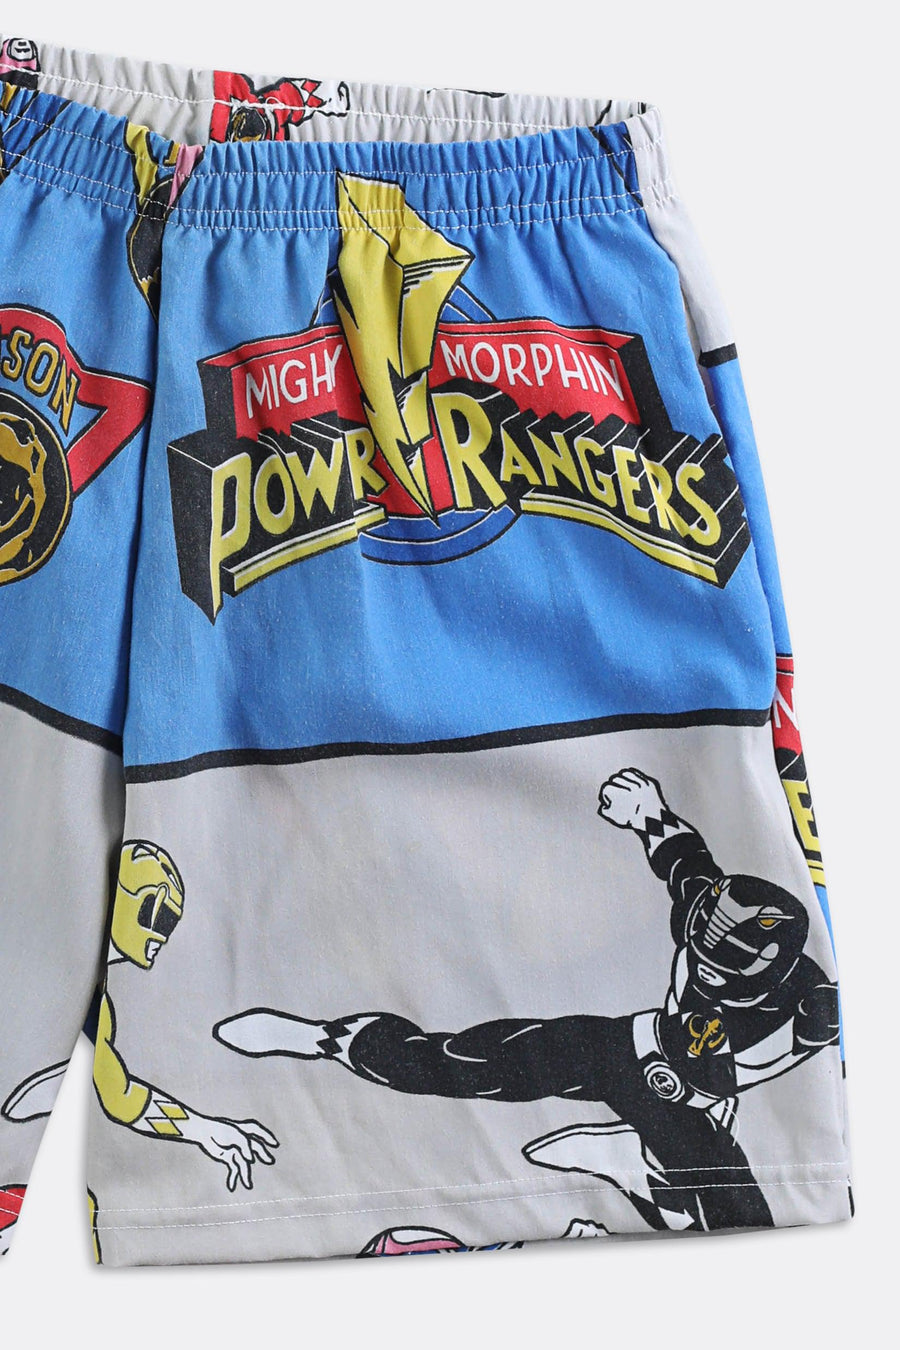 Unisex Rework Power Ranger Boy Shorts - M